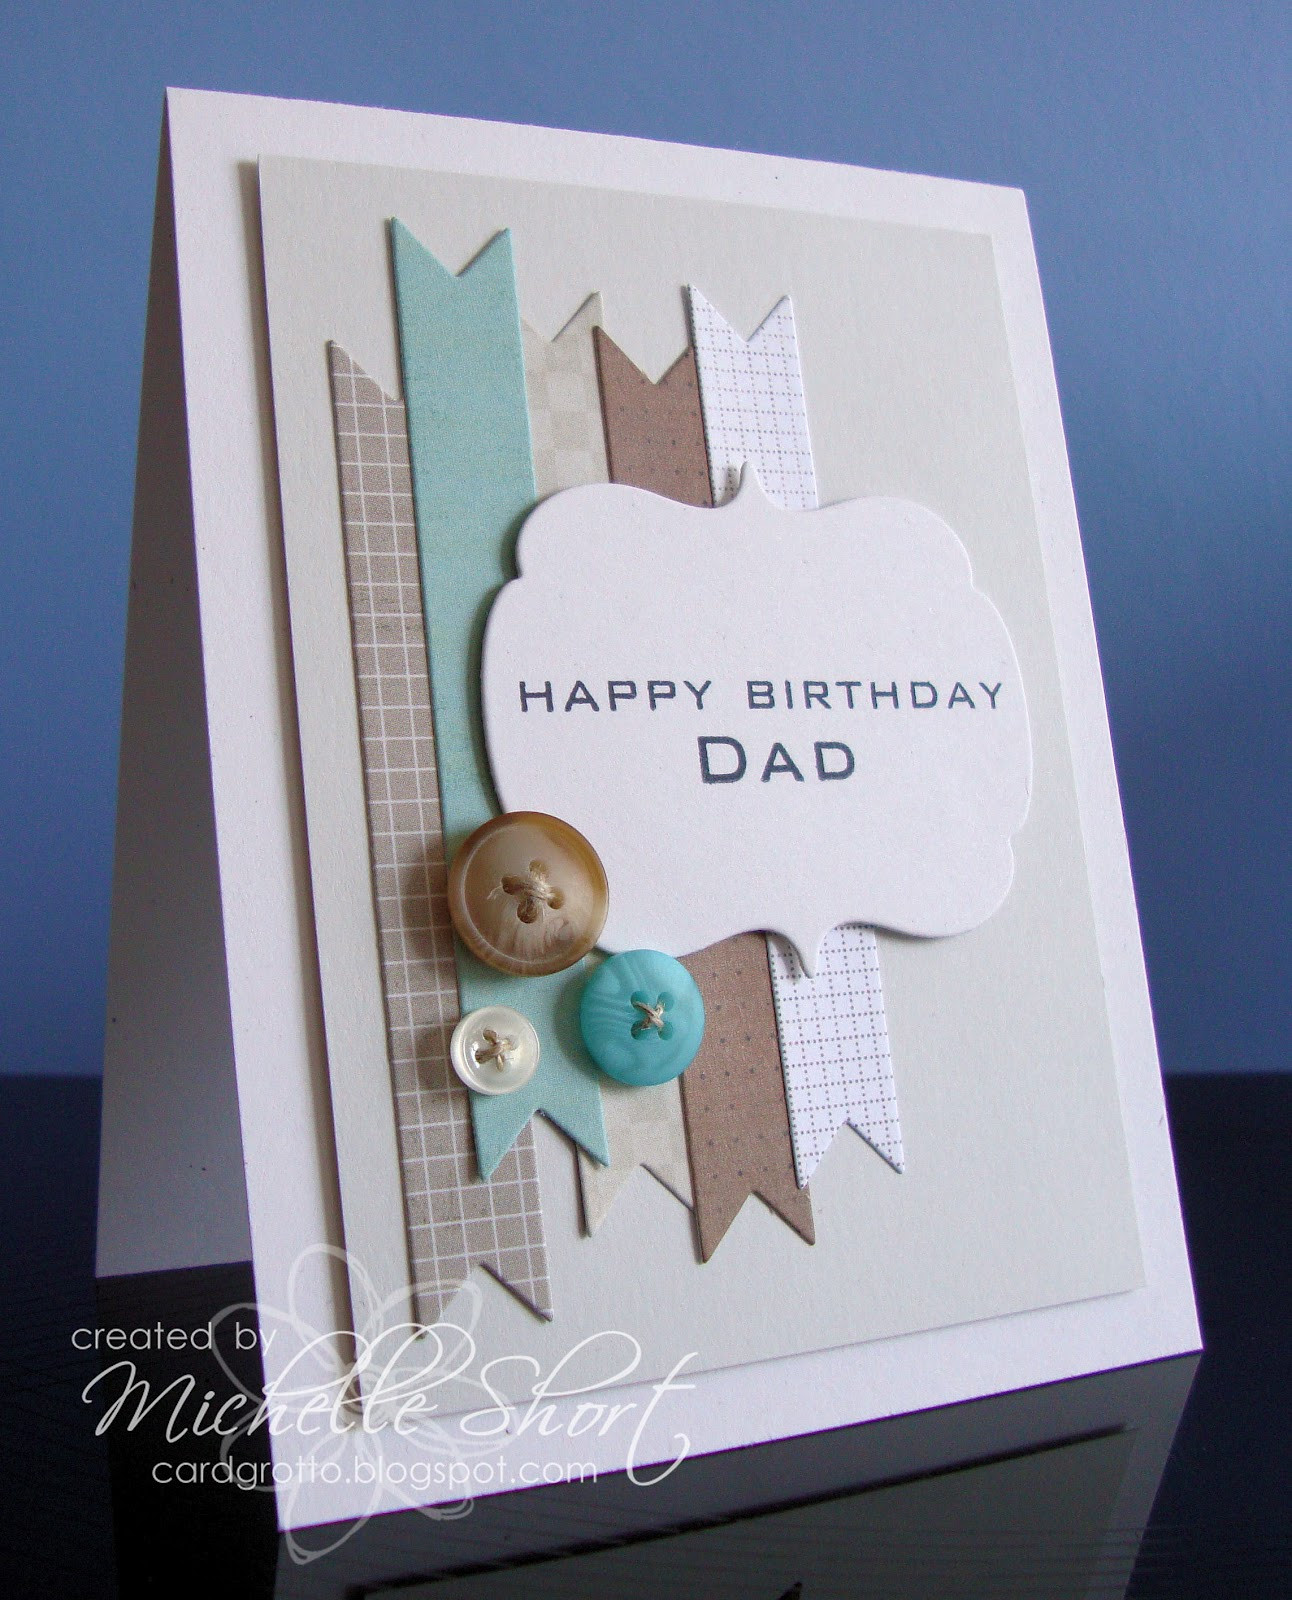 Birthday Card Ideas For Dad
 The Card Grotto Happy Birthday Dad